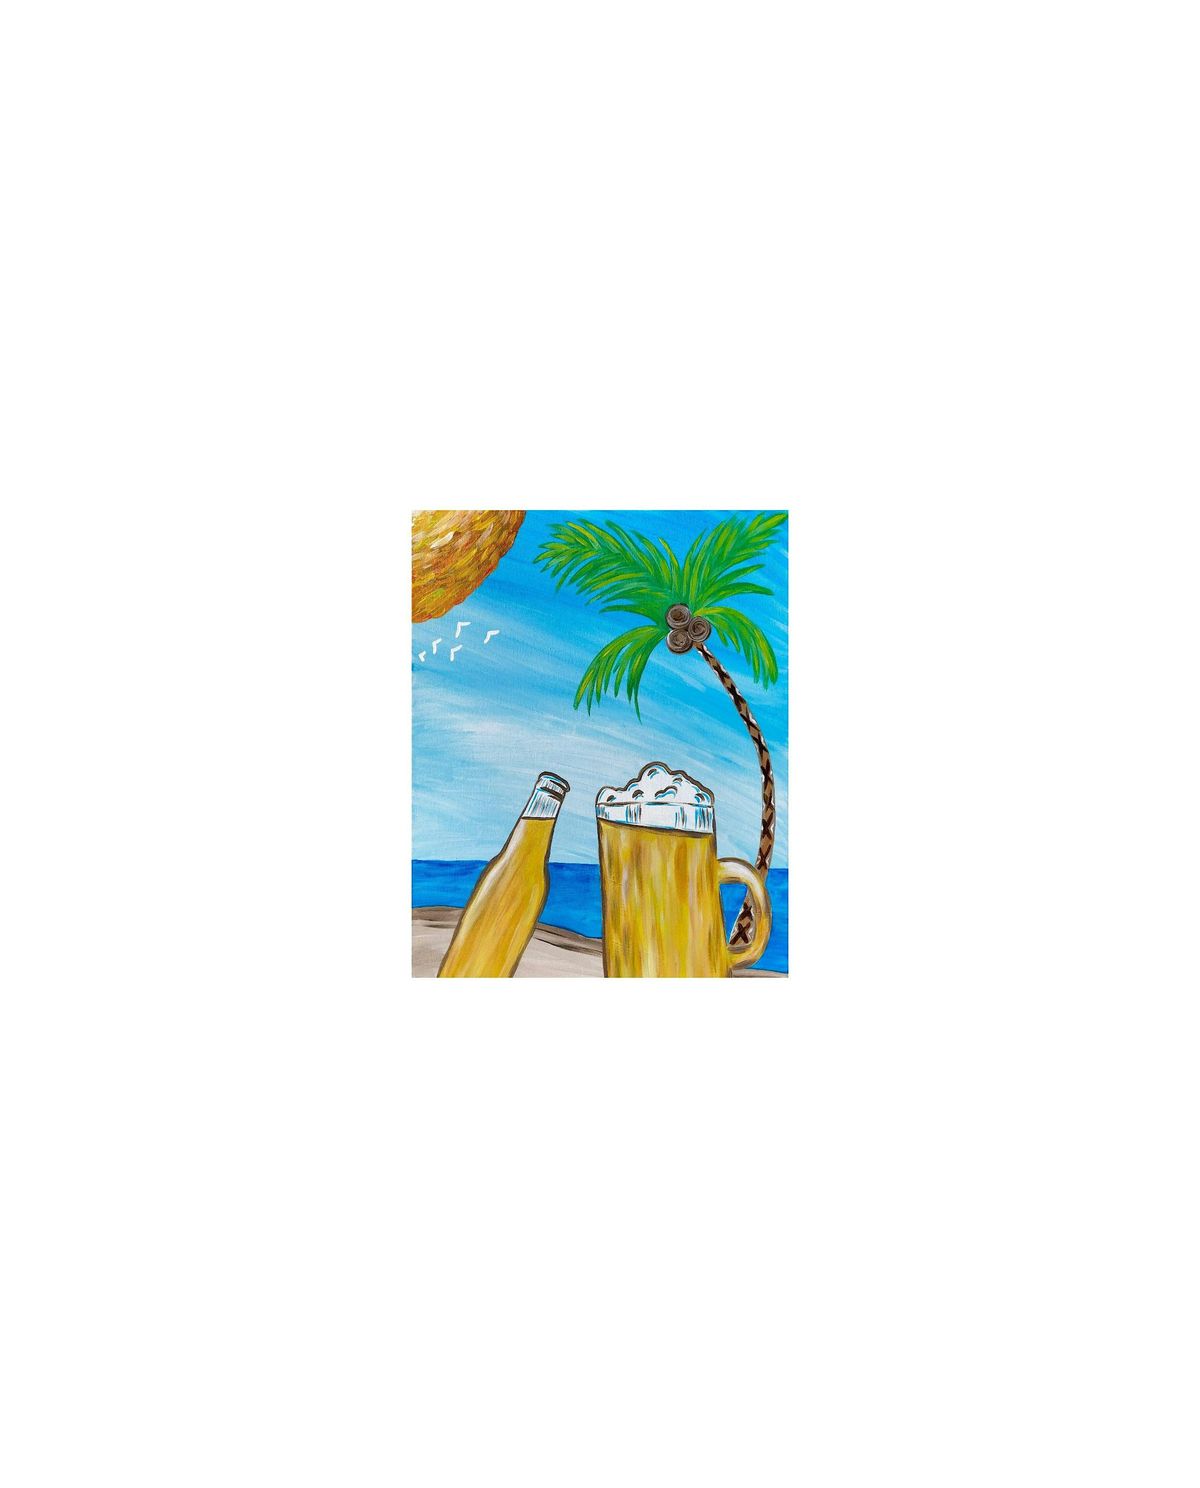 Waydo\u2019s Sand Bar - Beach Beers - Paint Party